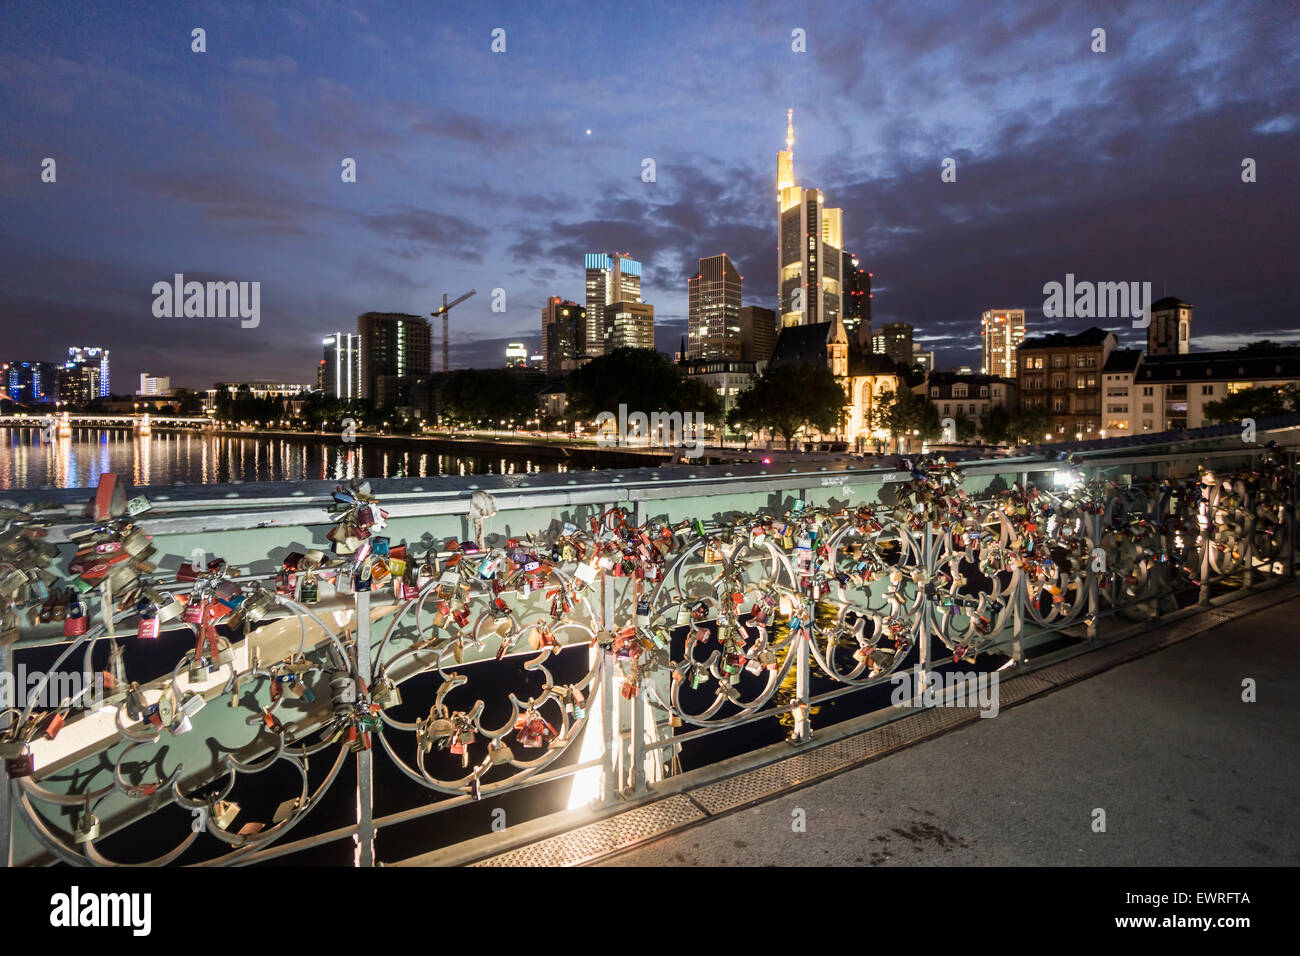 Eisener Steg, Love Lockers, Skyline, Frankfurt Stock Photo